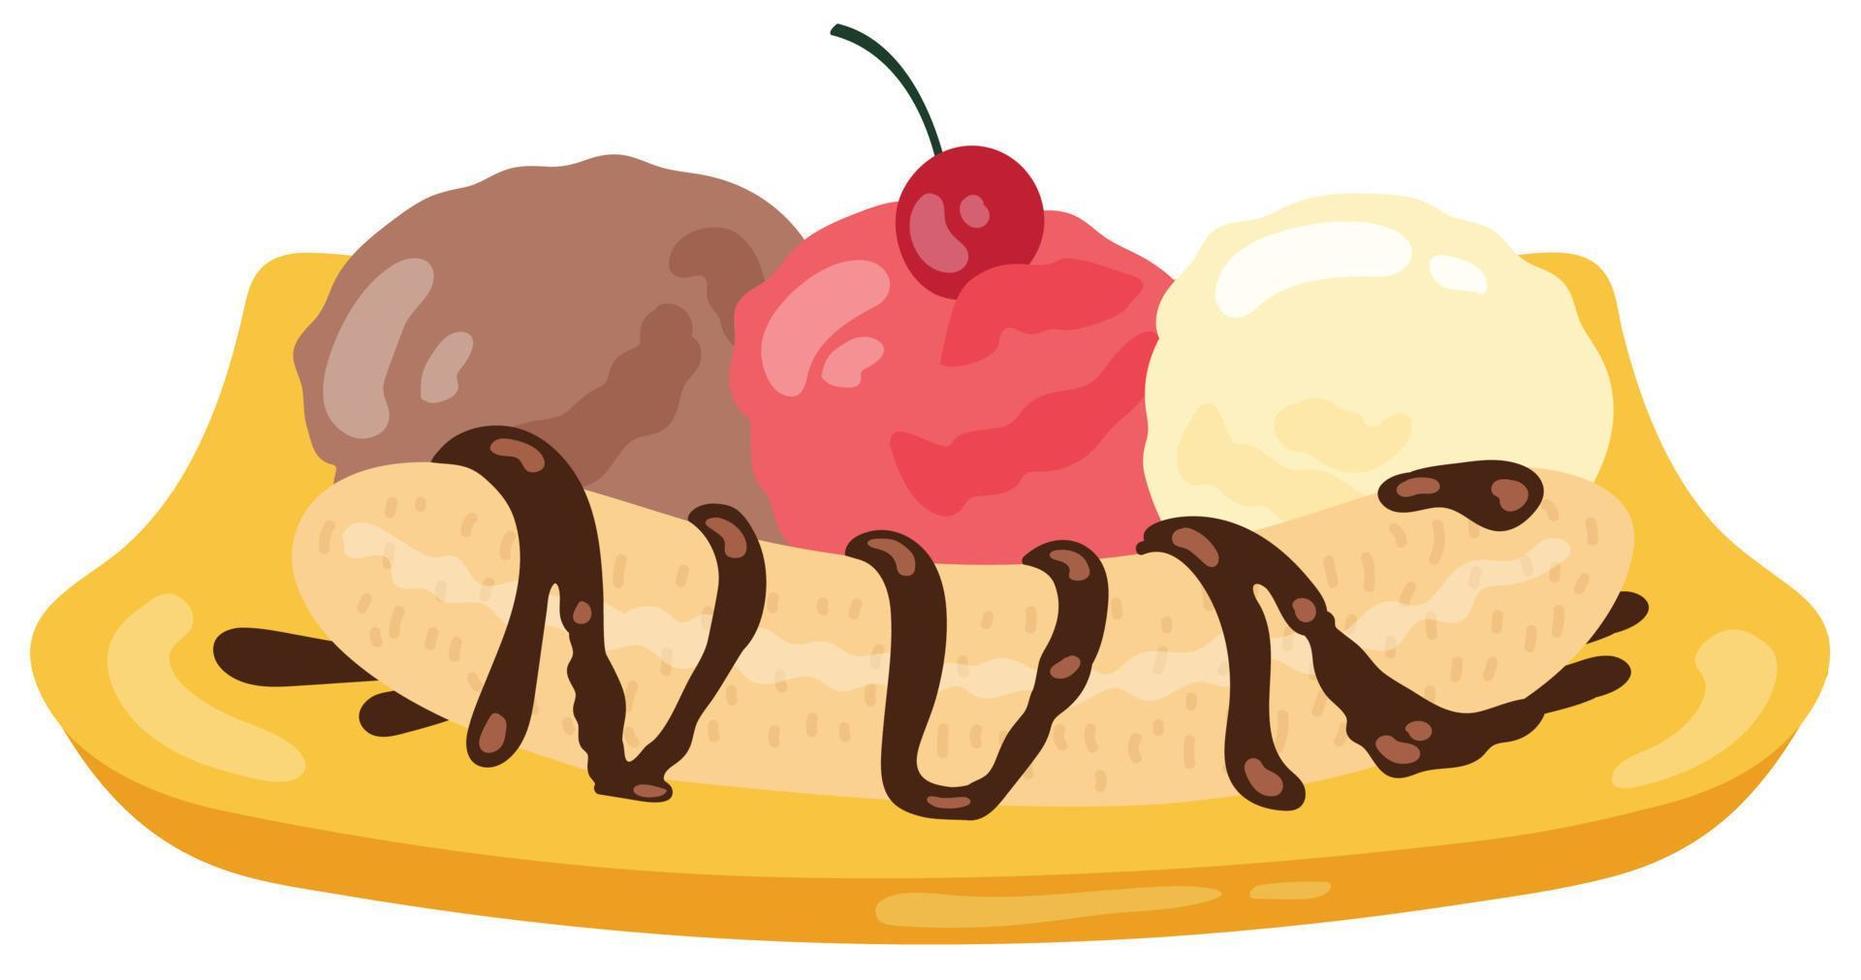 Banana split. Ice-cream dessert. Hand drawn vector illustration. Suitable for website, postcards, menu, stickers.